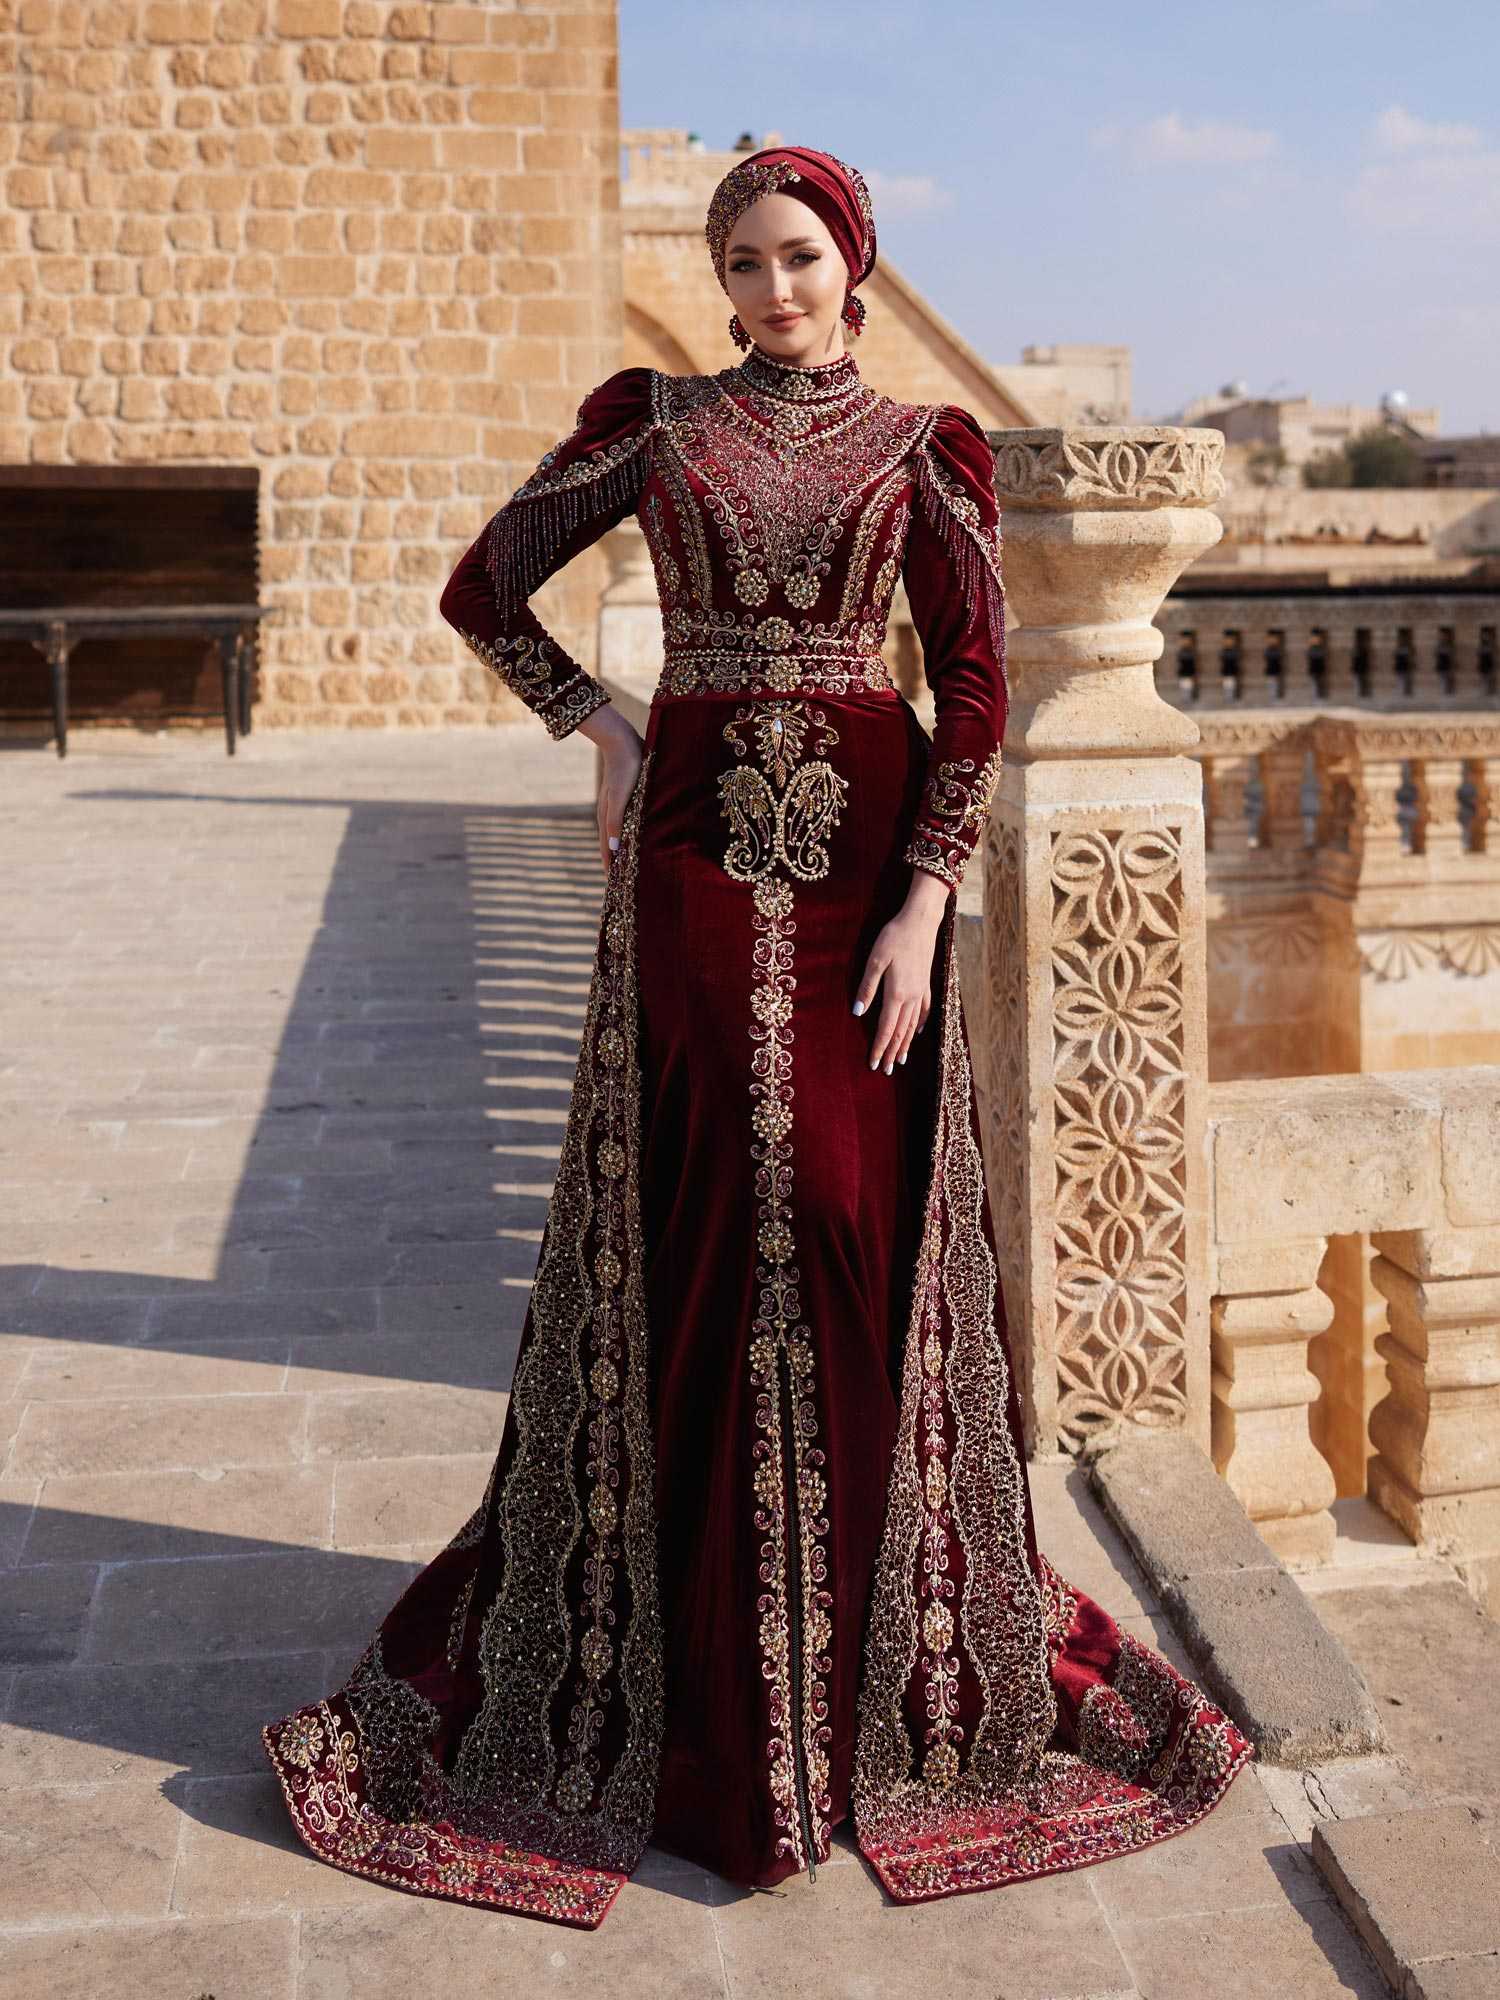 Modest Islamic Clothing Online by EastEssence for Muslim Women, Men –  EastEssence.com